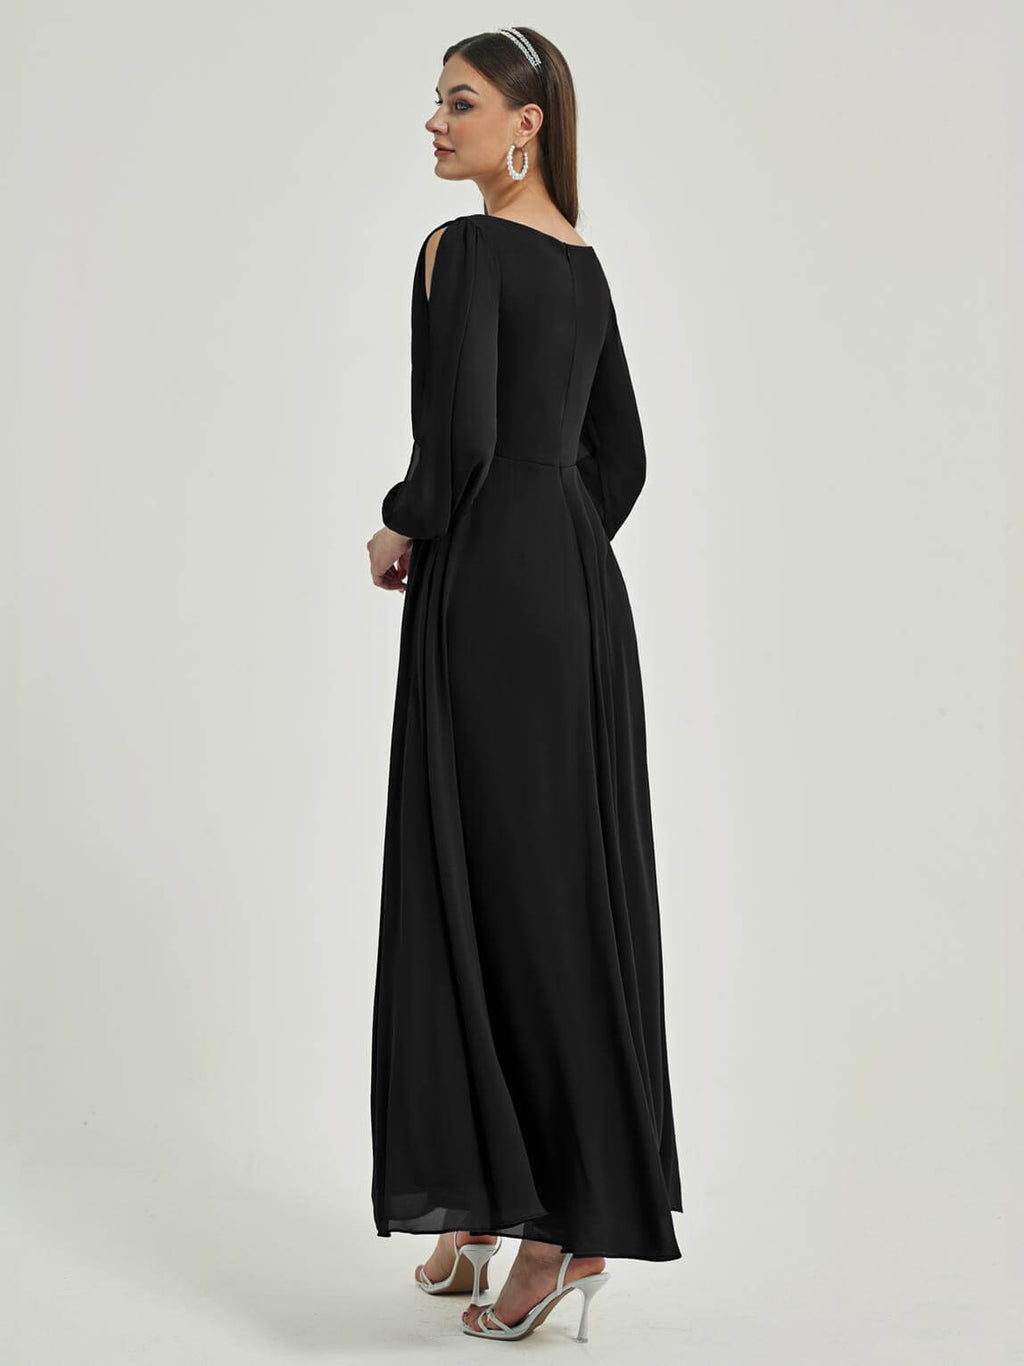 NZ Bridal Black Long Sleeves V Neck Chiffon bridesmaid dresses 00461ep Liv a